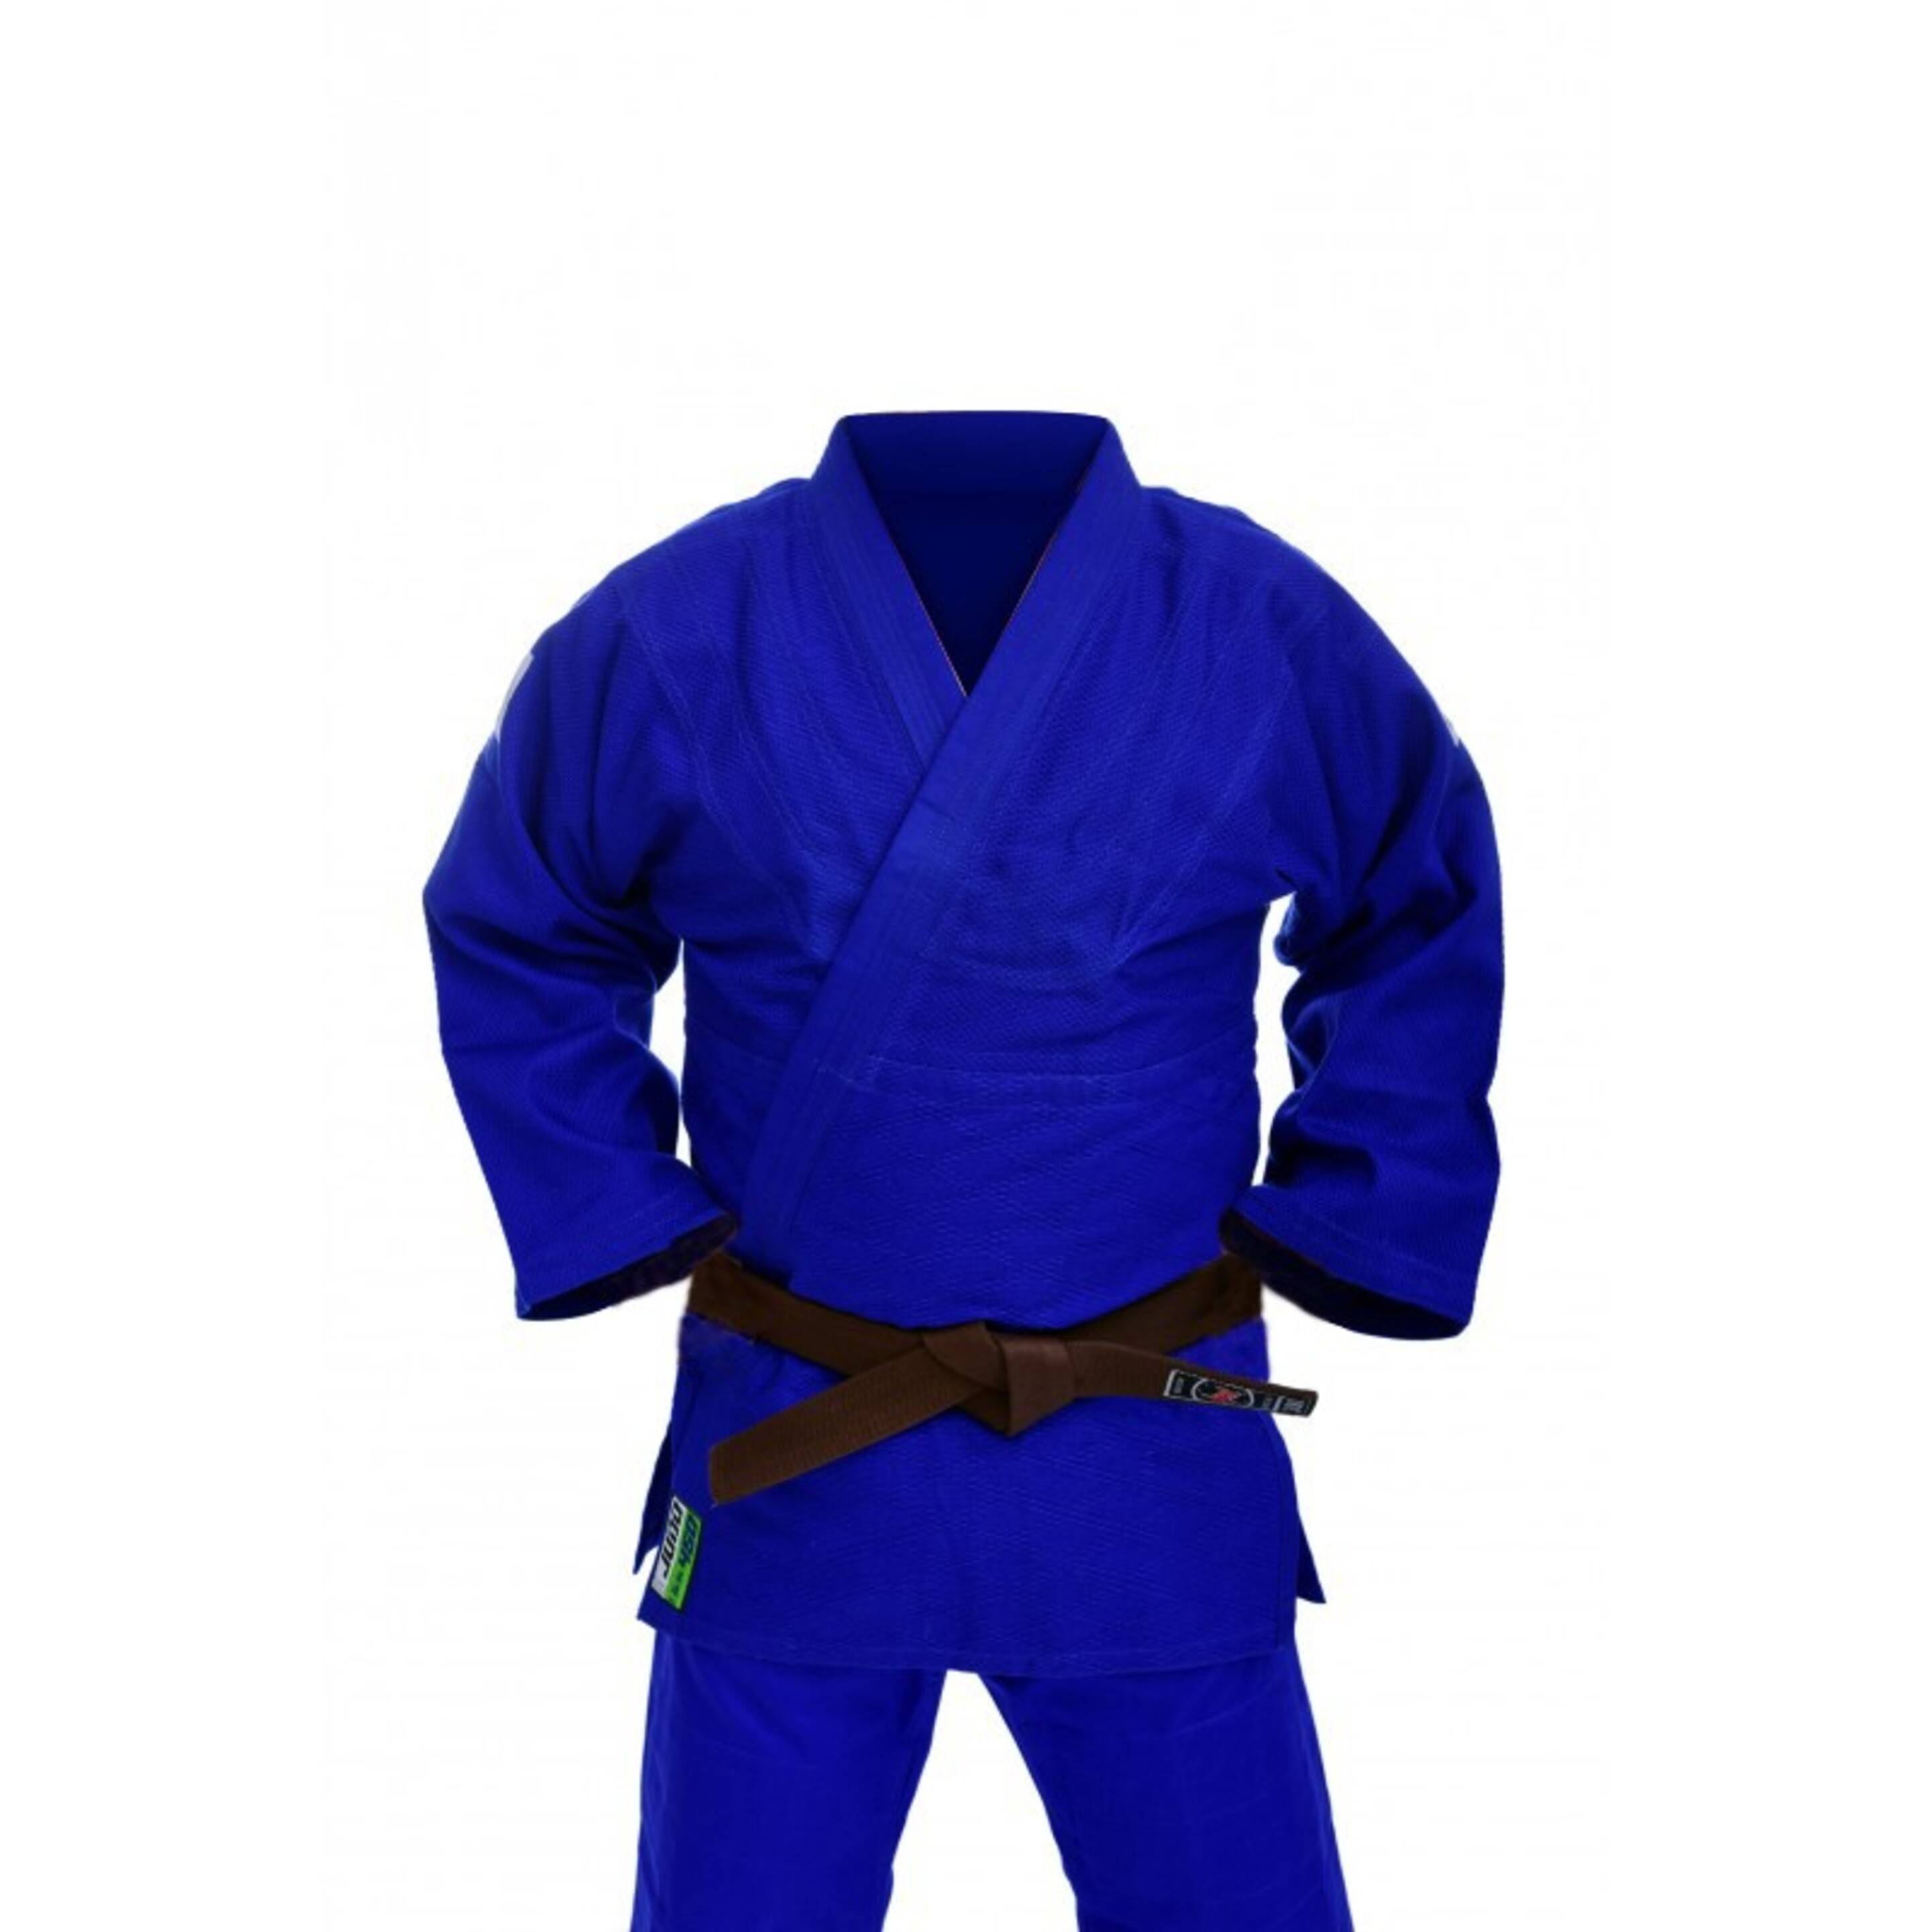 Judogi Nkl Top Training - azul - 